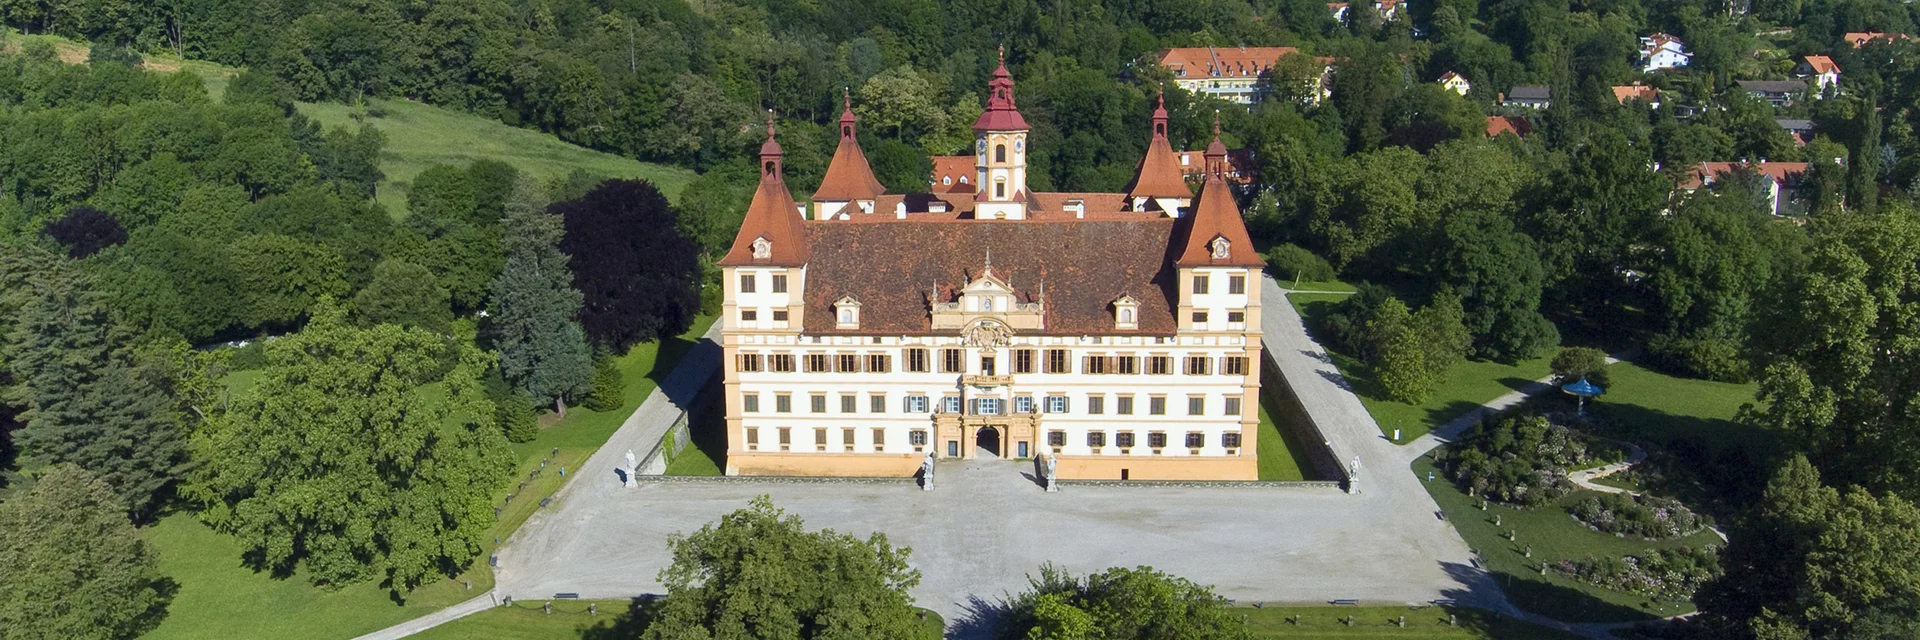 UNESCO Welterbe Schloss Eggenberg | © Universalmuseum Joanneum | Zepp@Cam